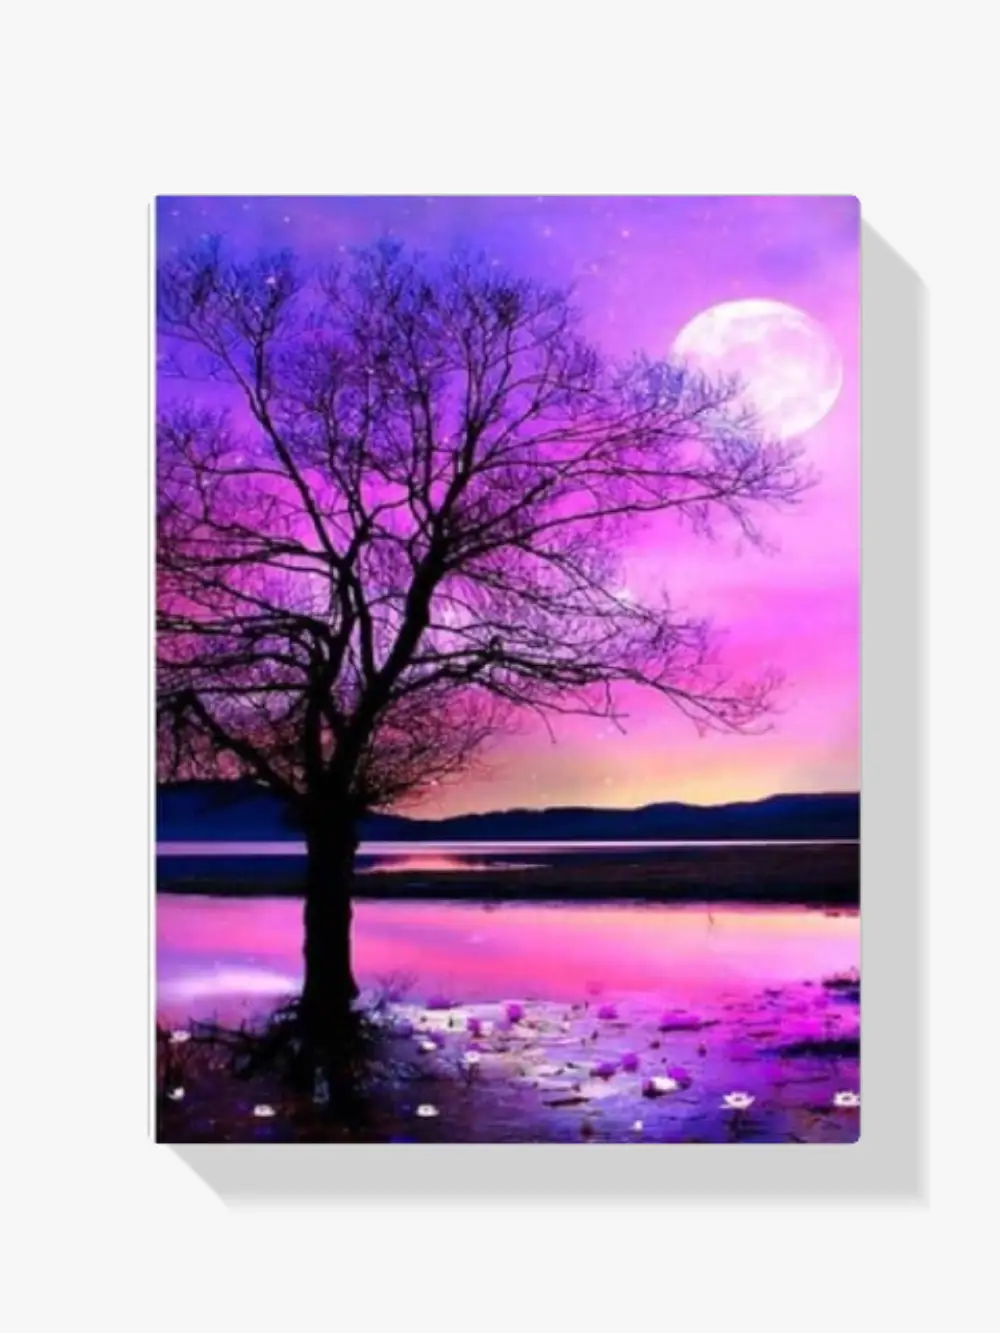 5D Diamond Painting Baum und rosa Blick